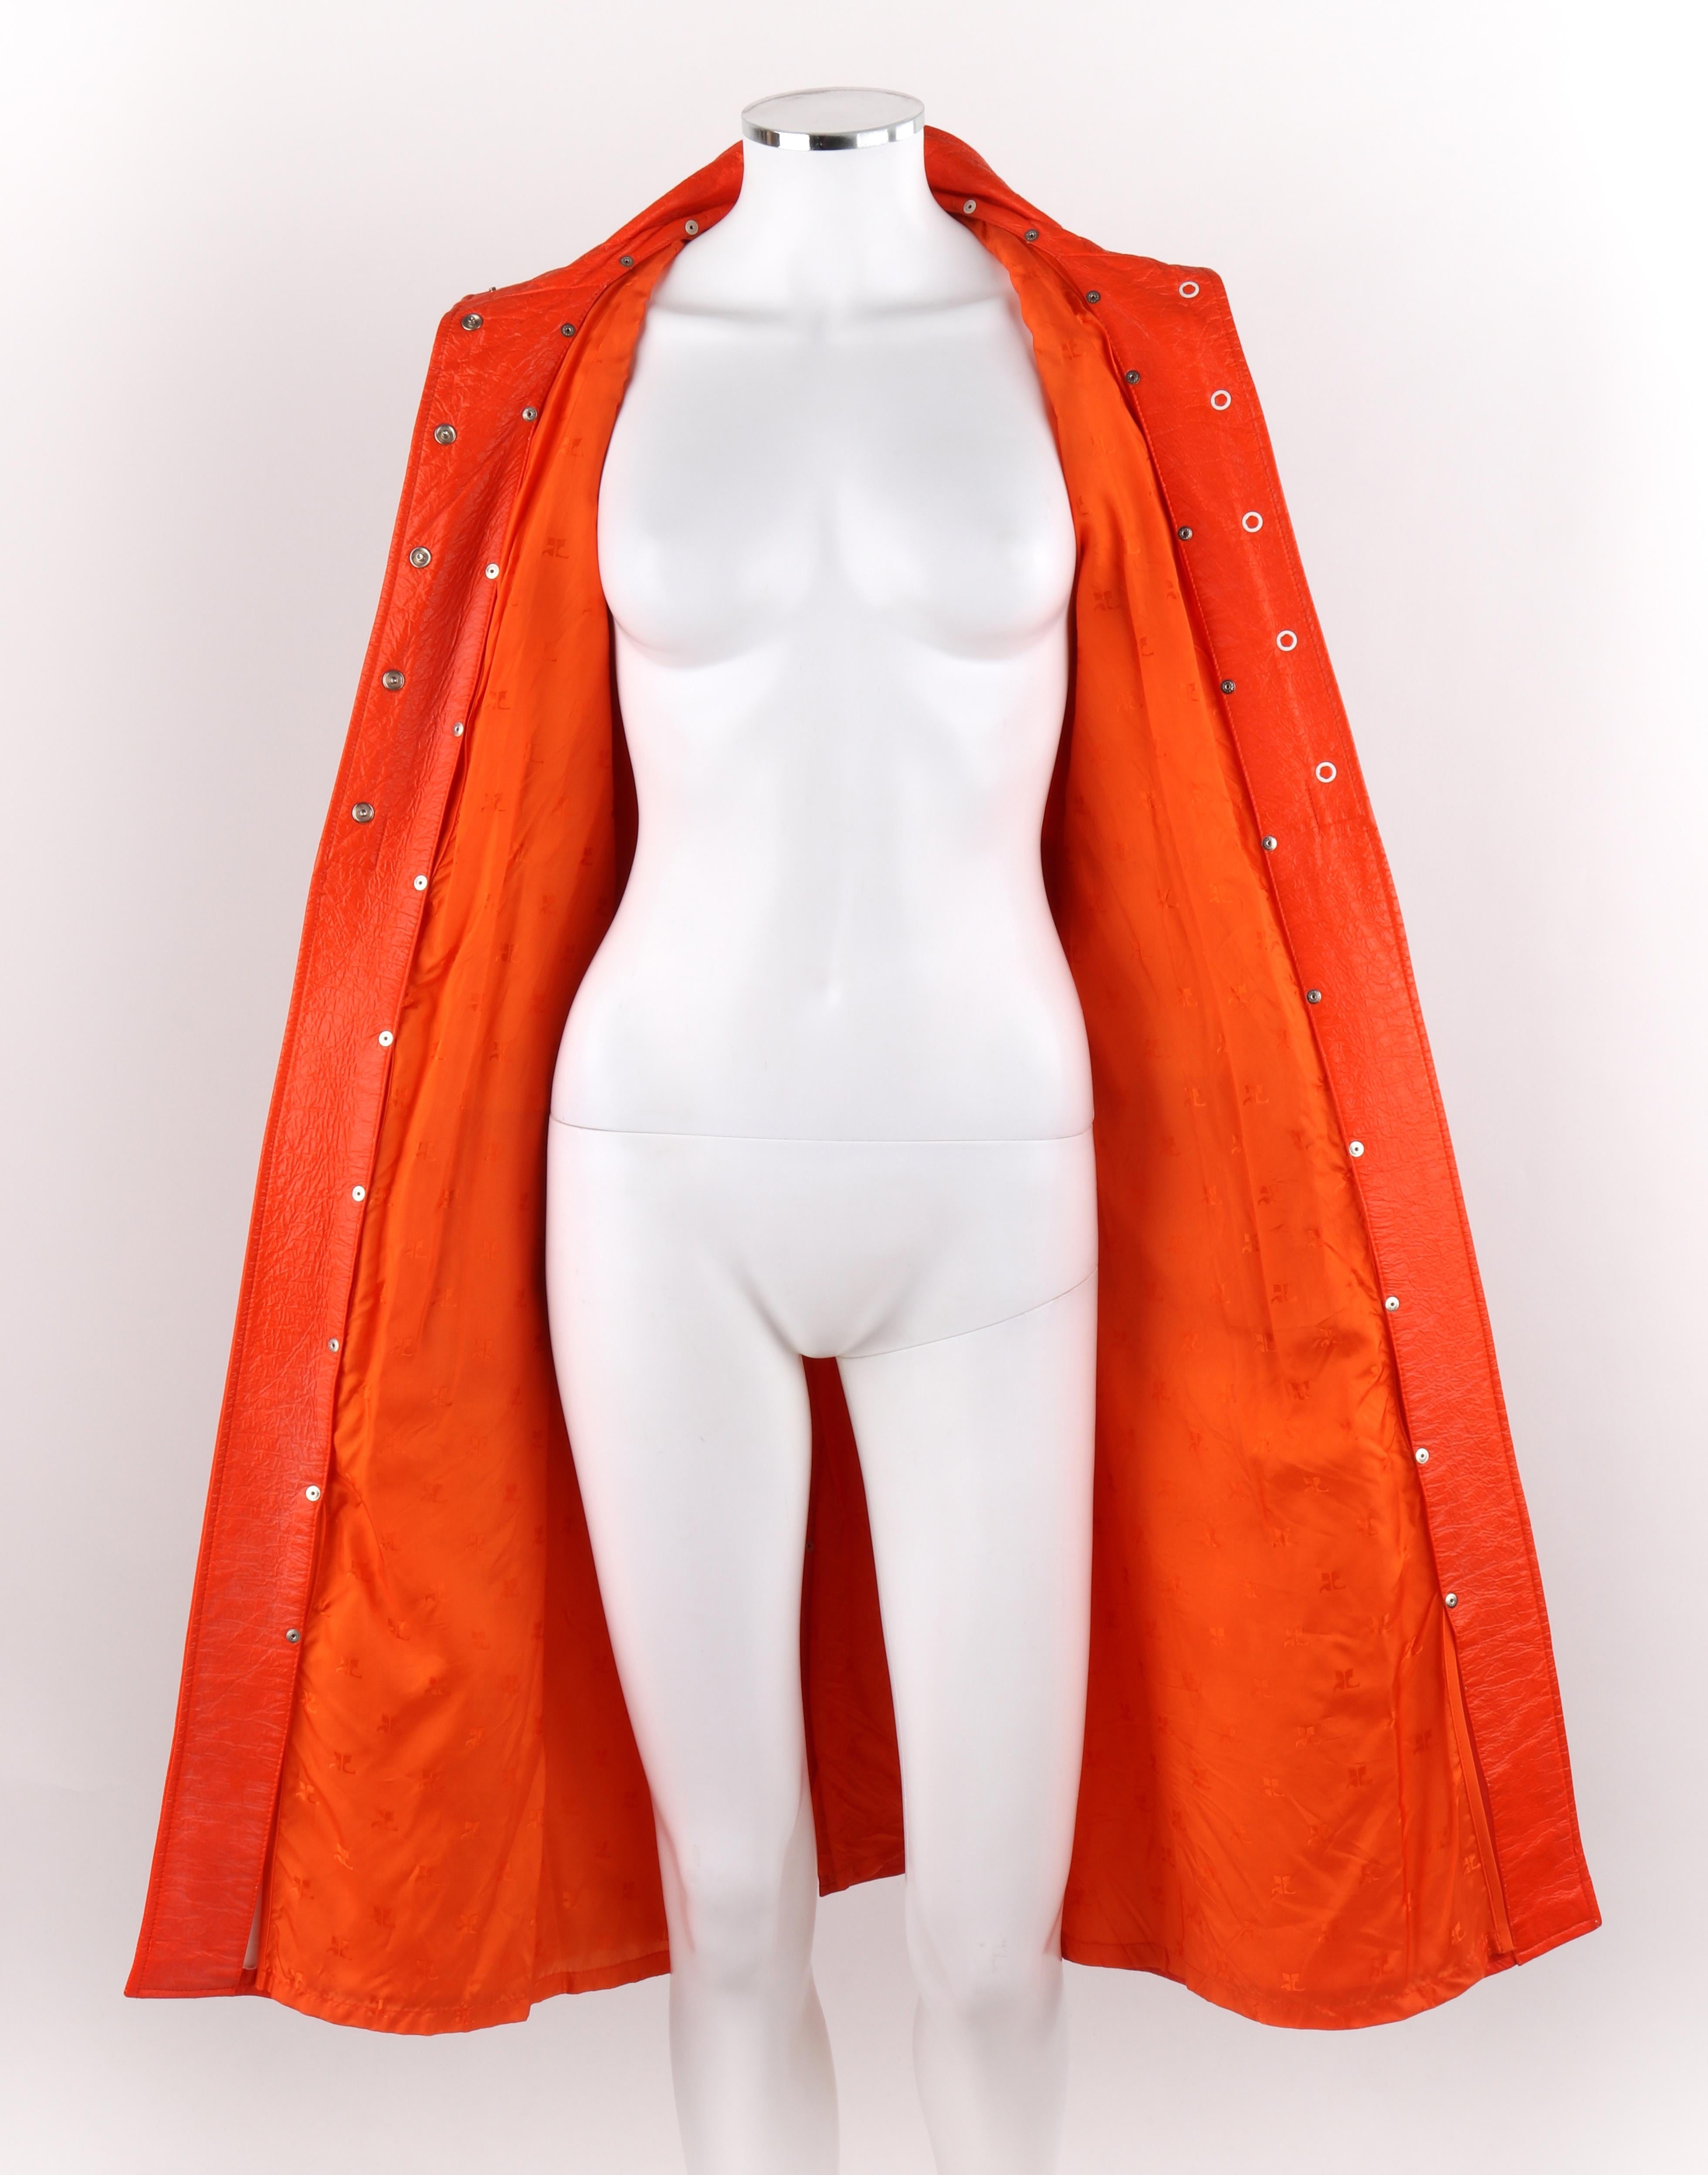 COURREGES c.1972 Orange Textured Vinyl Mod Signature Logo Trench Coat Jacket  4